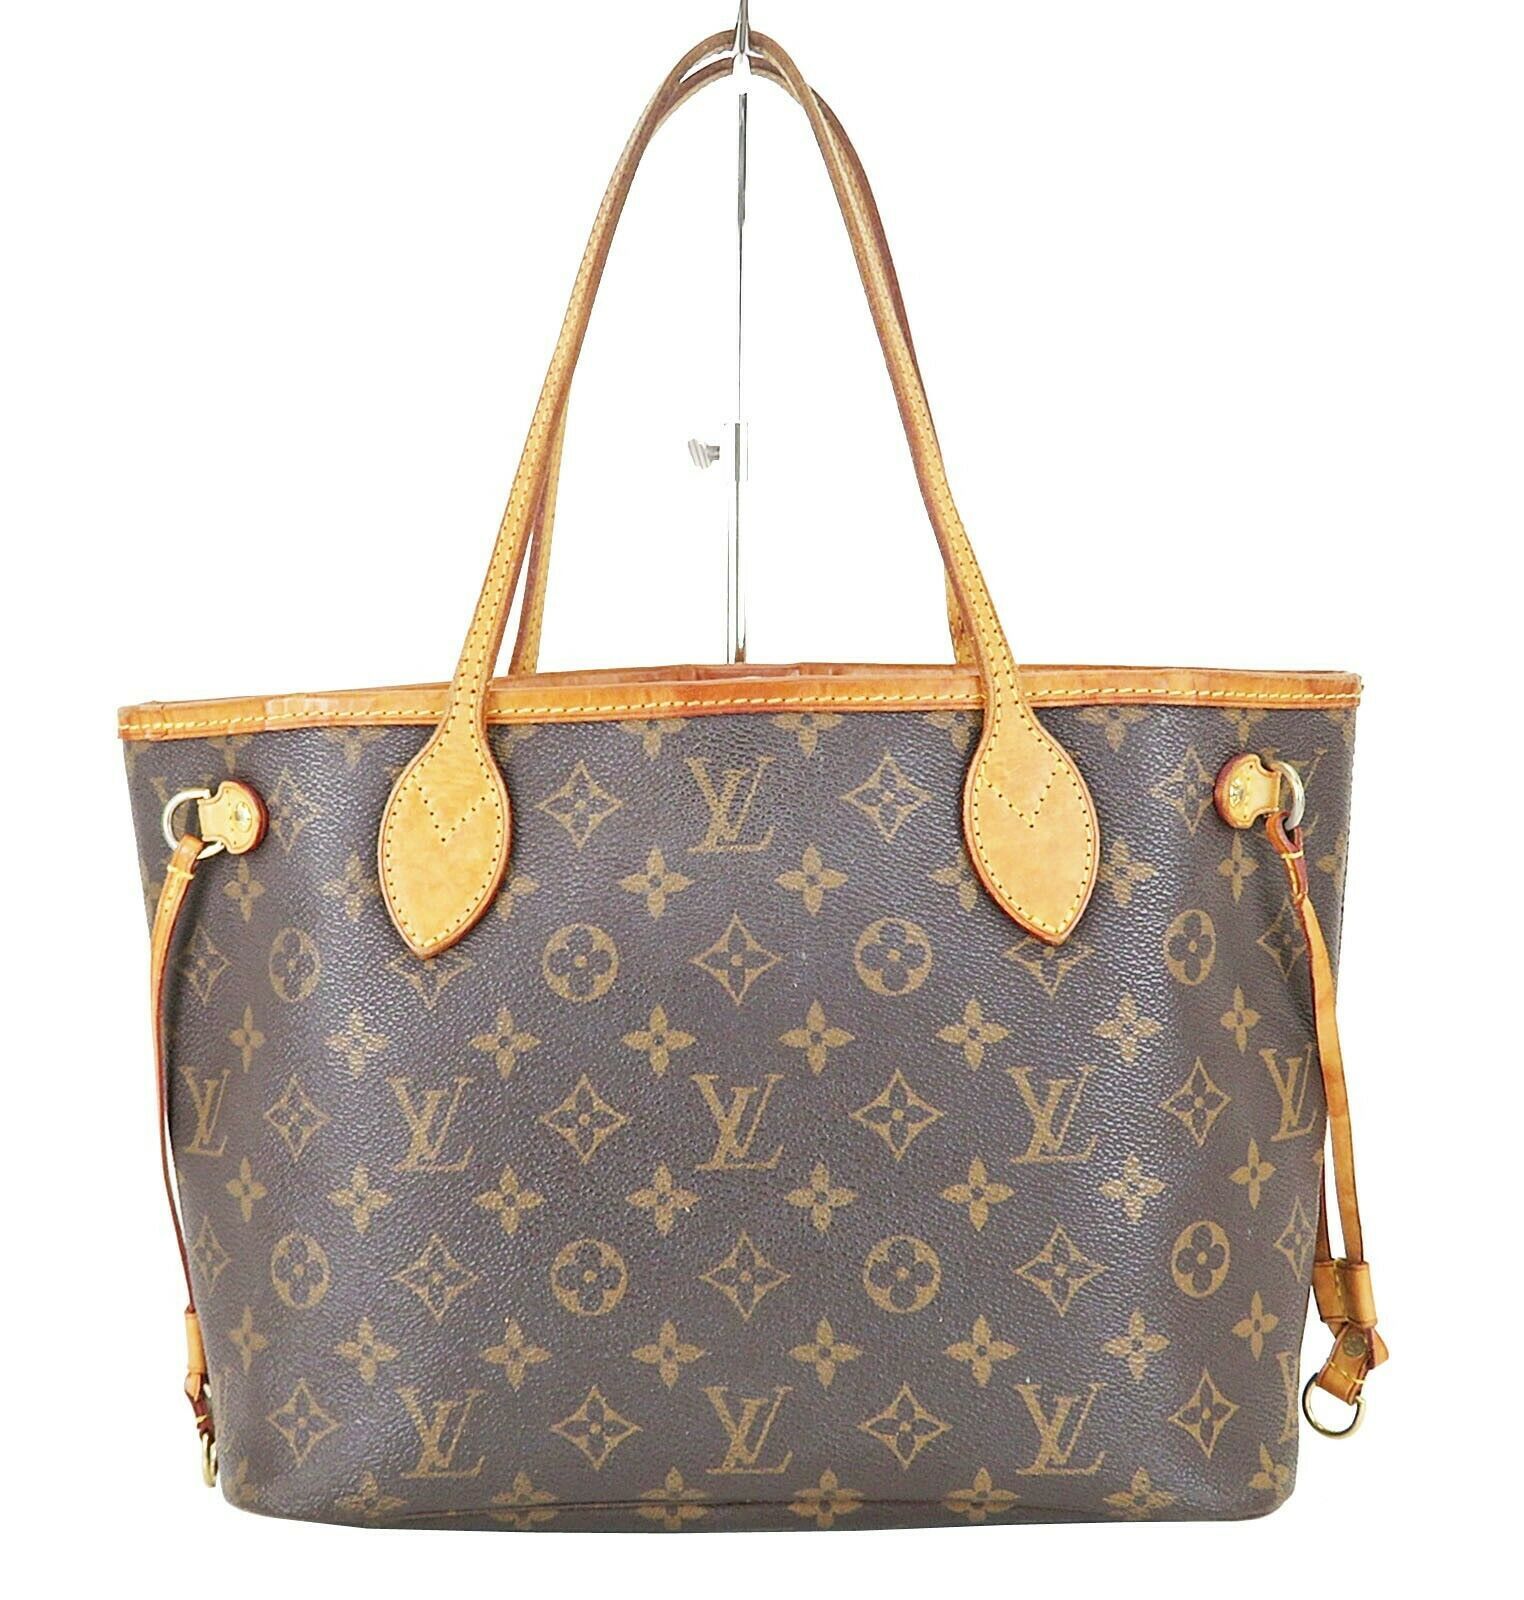 Authentic LOUIS VUITTON Neverfull PM Monogram Tote Bag Purse #35695 - Women&#39;s Bags & Handbags